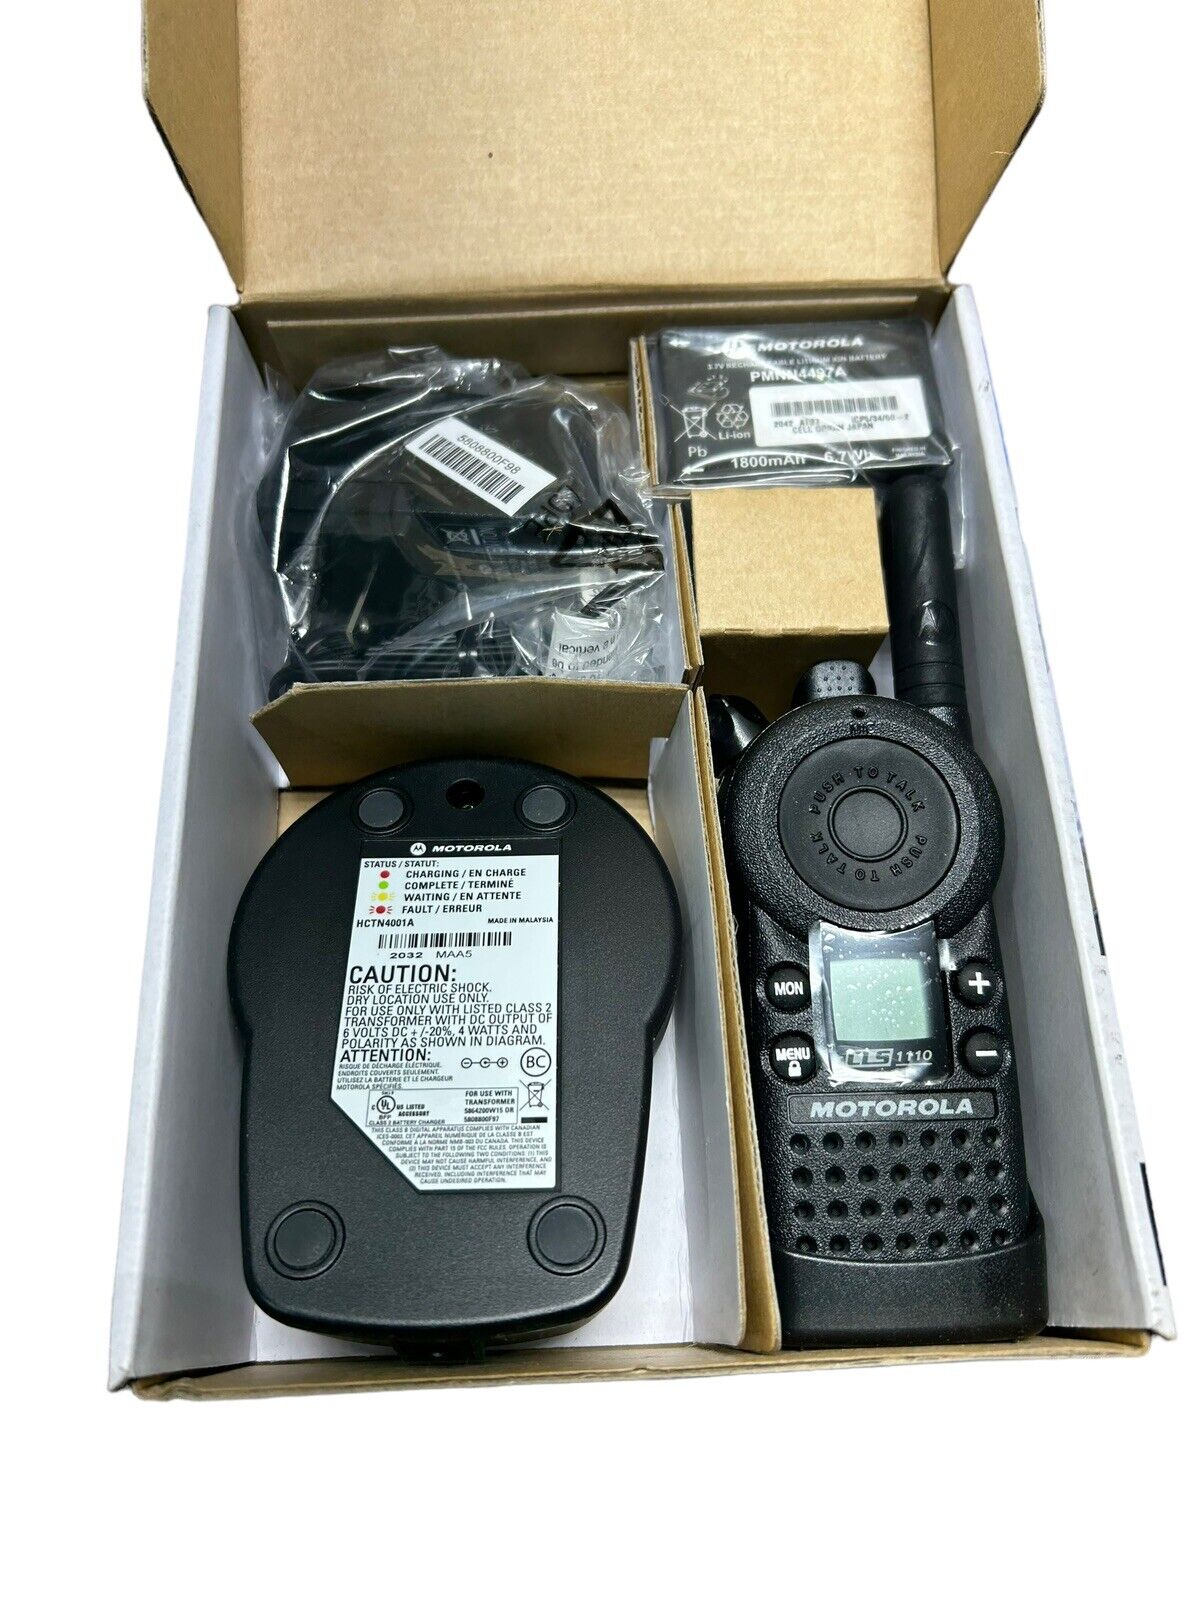 Motorola+CLS1110+Two-Way+Radio+-+Black for sale online eBay